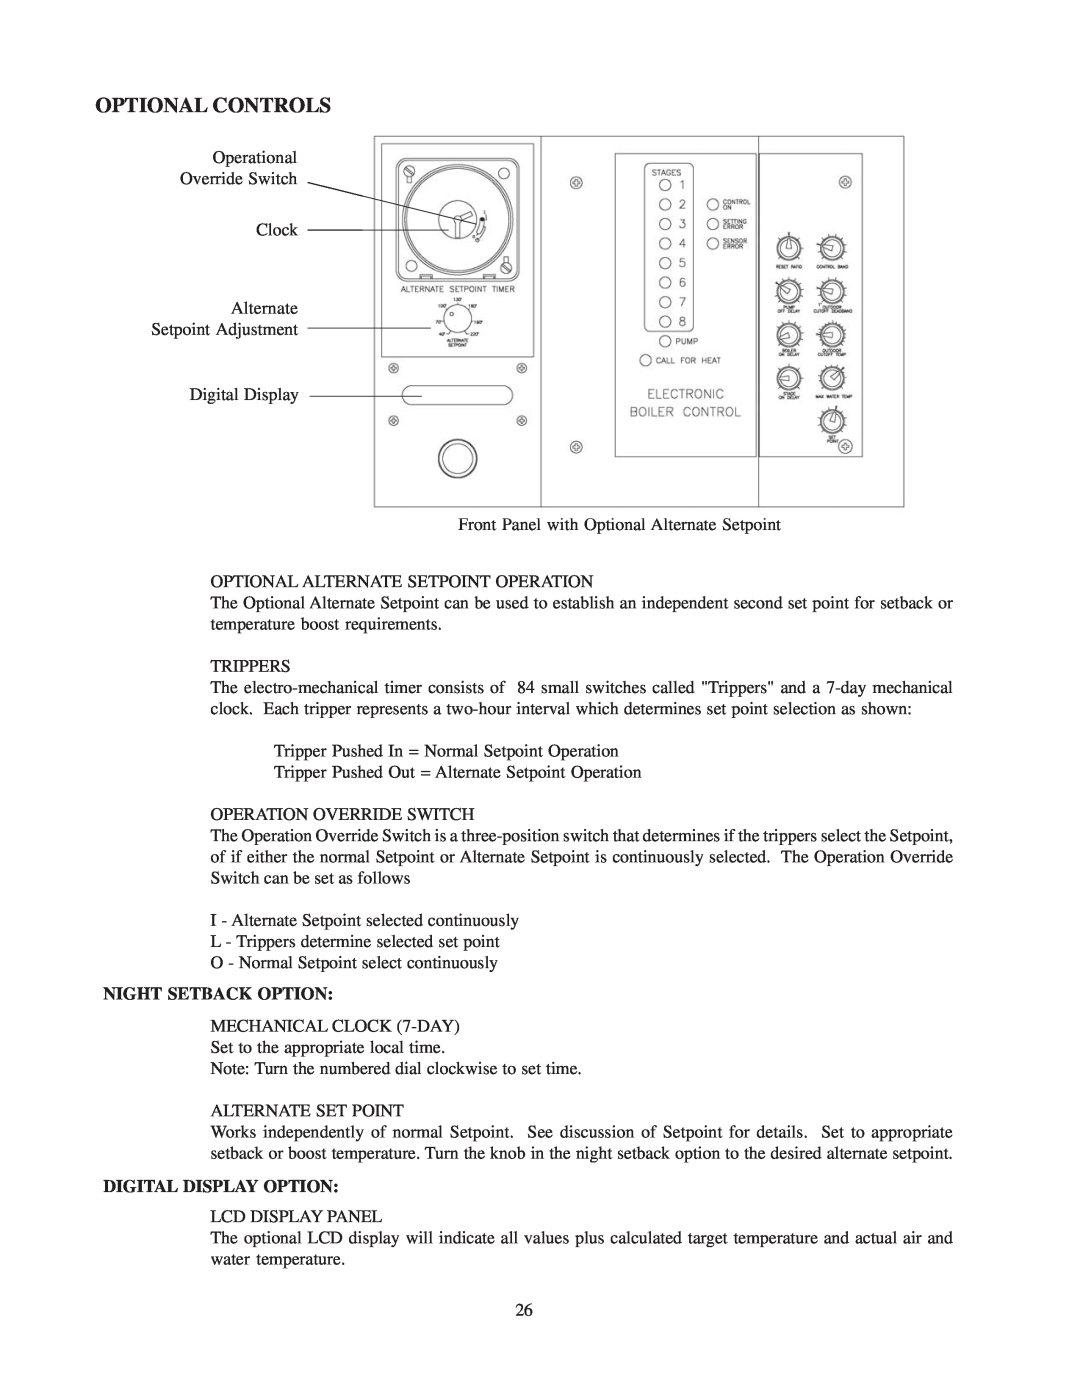 Raypak 240692 manual Optional Controls, Night Setback Option, Digital Display Option 